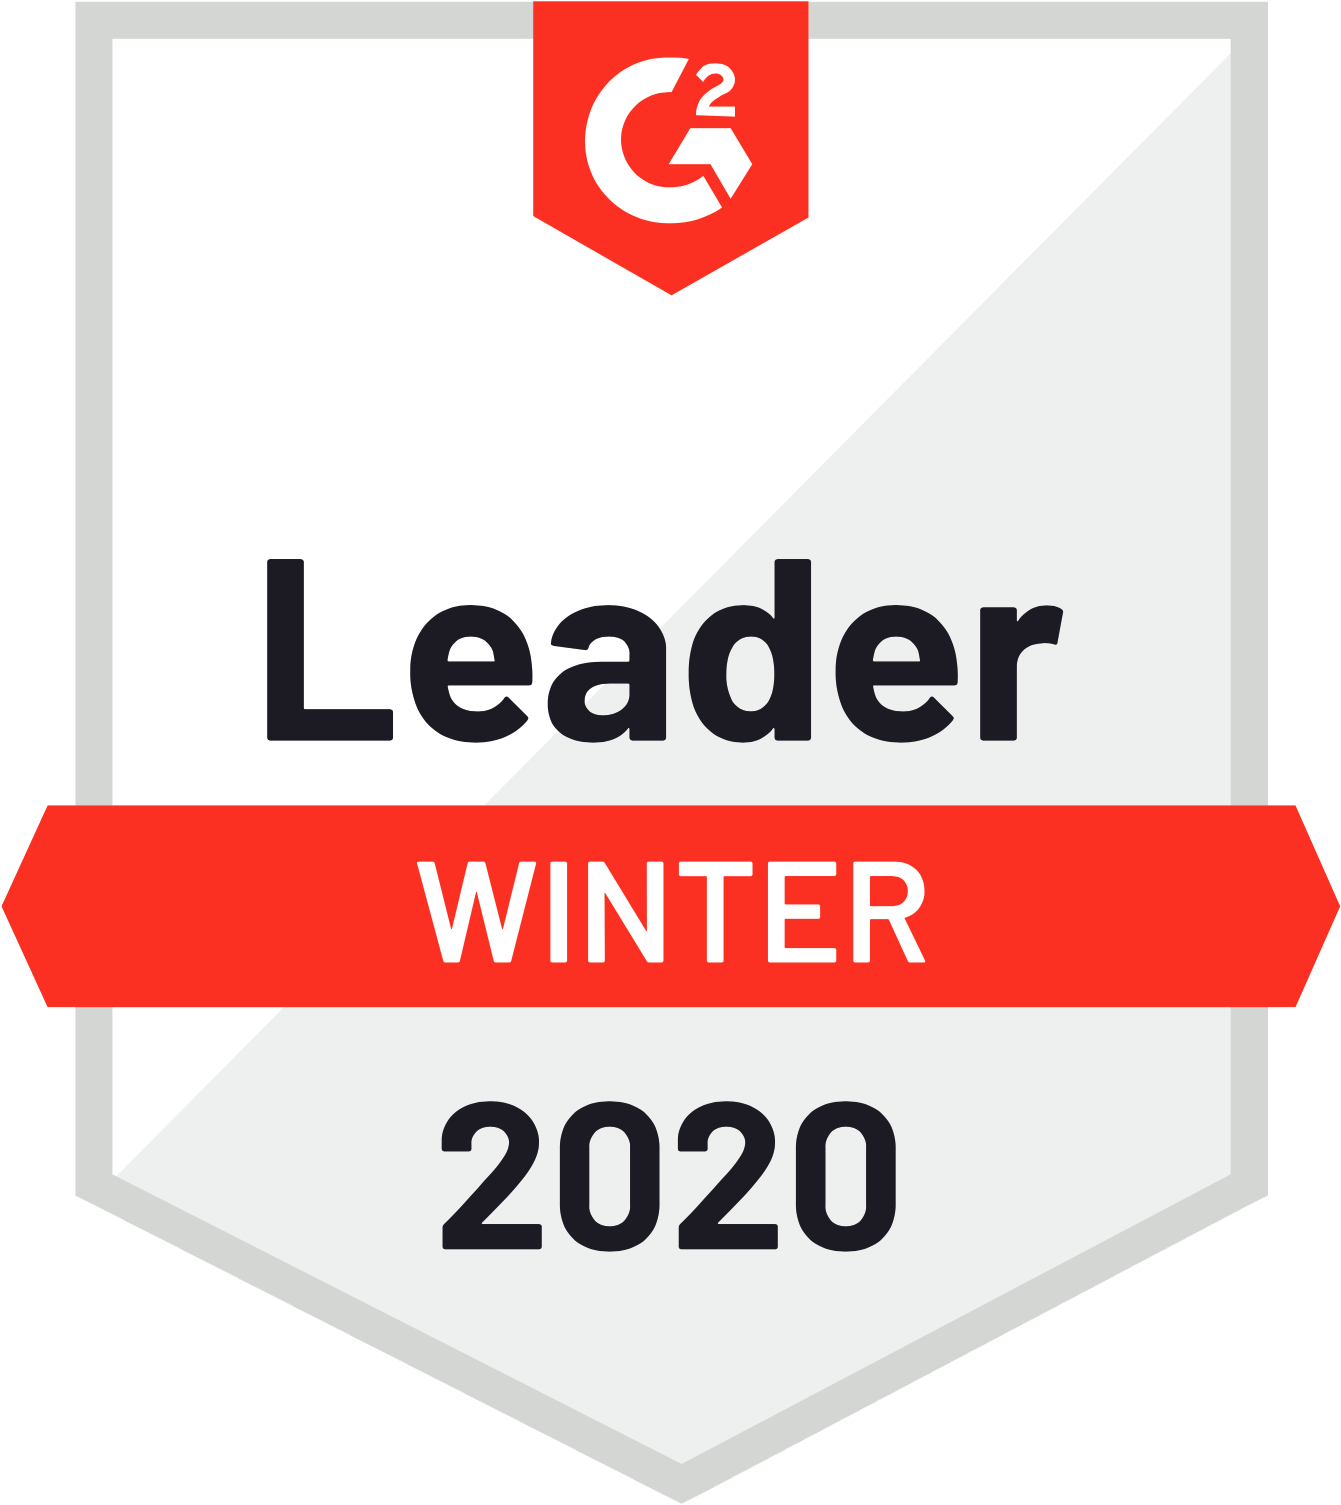 G2-leader-winter2020 badge